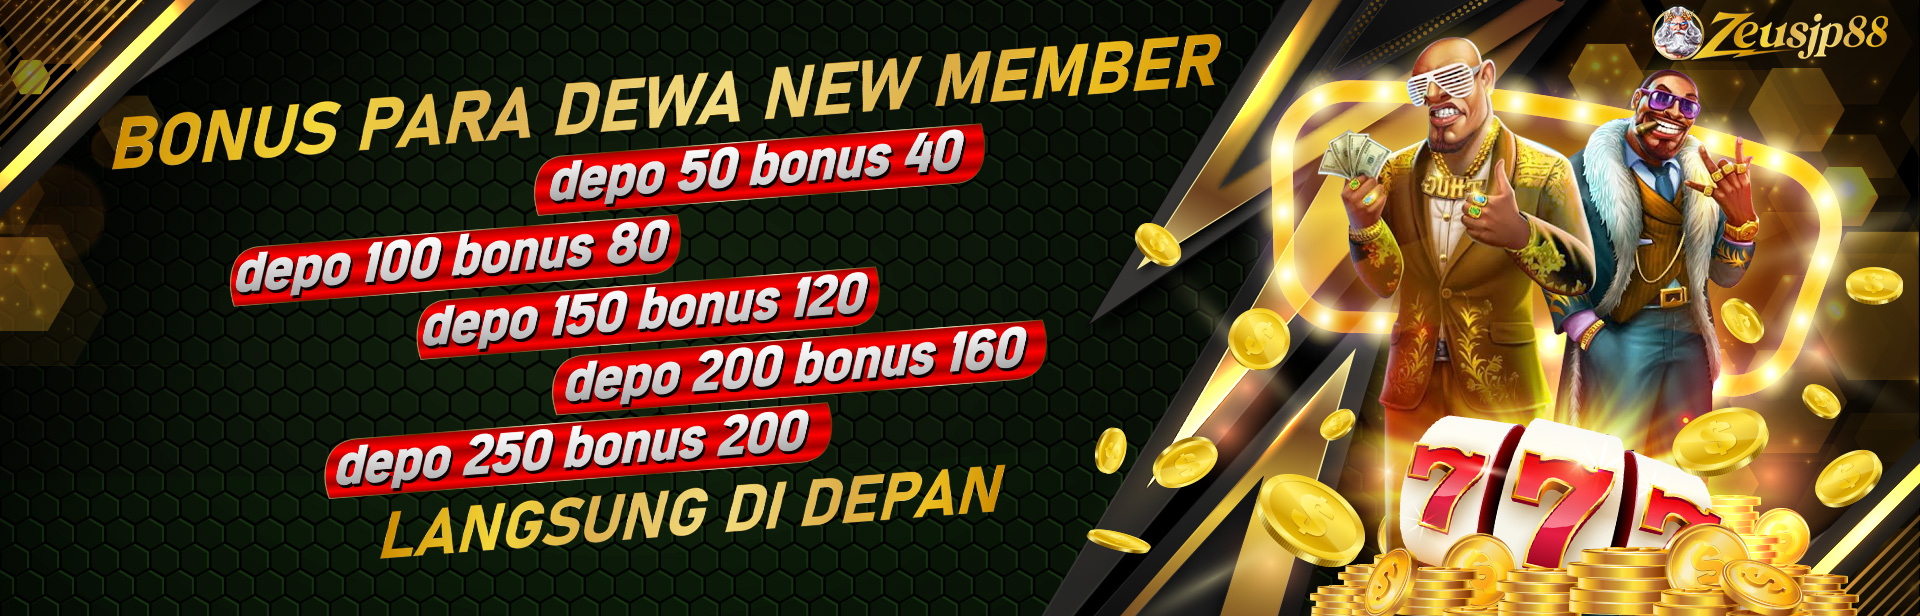 bonus new member 80%